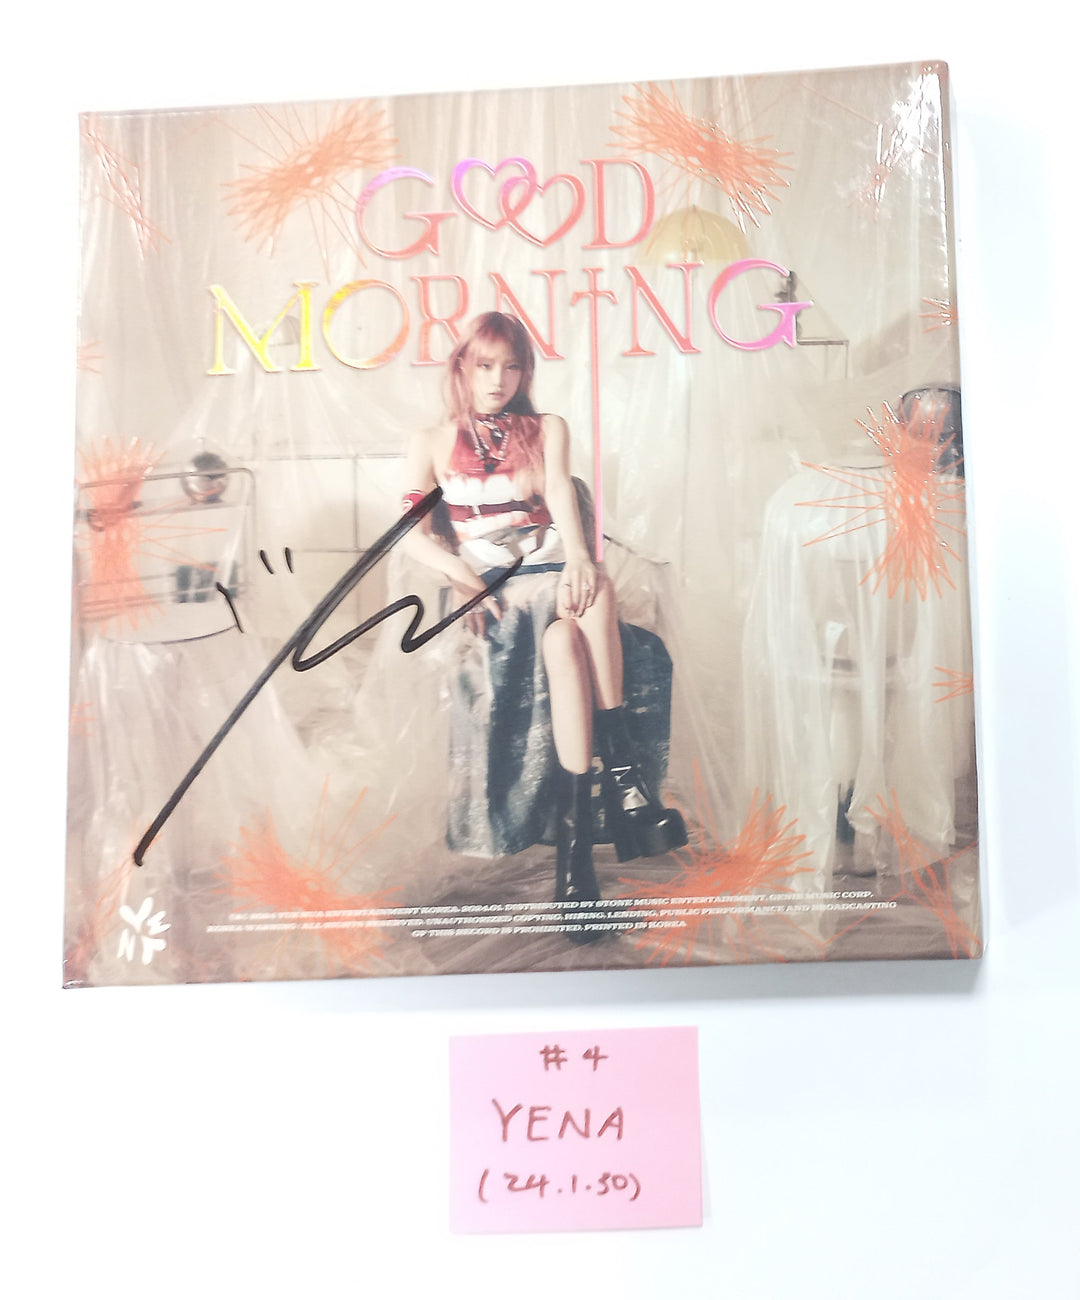 Yena 3rd Mini「Good Morning」 - 直筆サイン入りプロモアルバム [24.1.30]